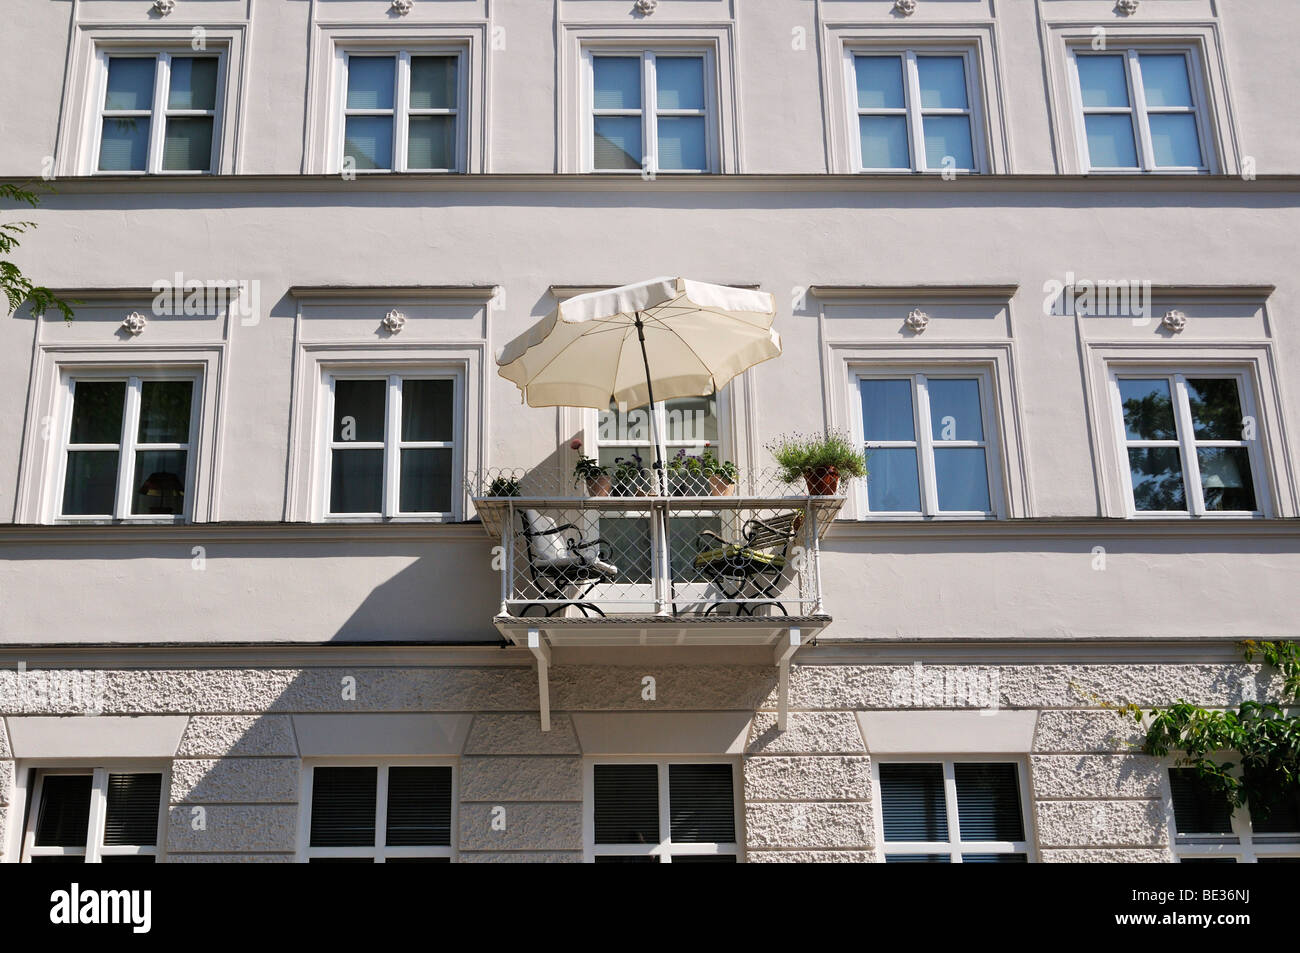 Nikolaistrasse street, facade with a balcony and parasol, Schwabing, Munich, Bavaria, Germany, Europe Stock Photo